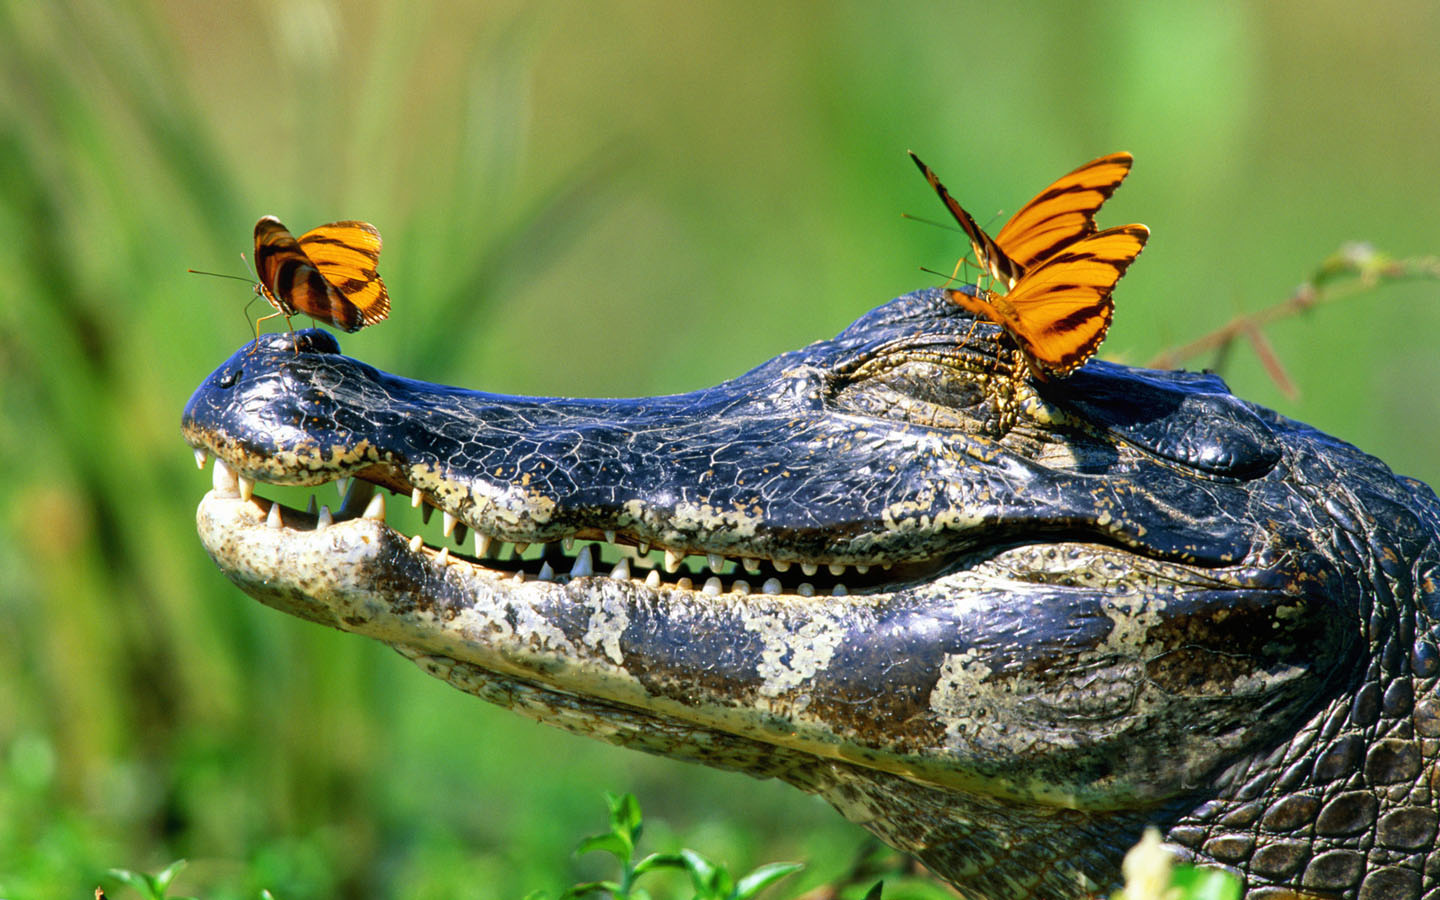 Butterflies resting on a caiman in the Pantanal, Brazil